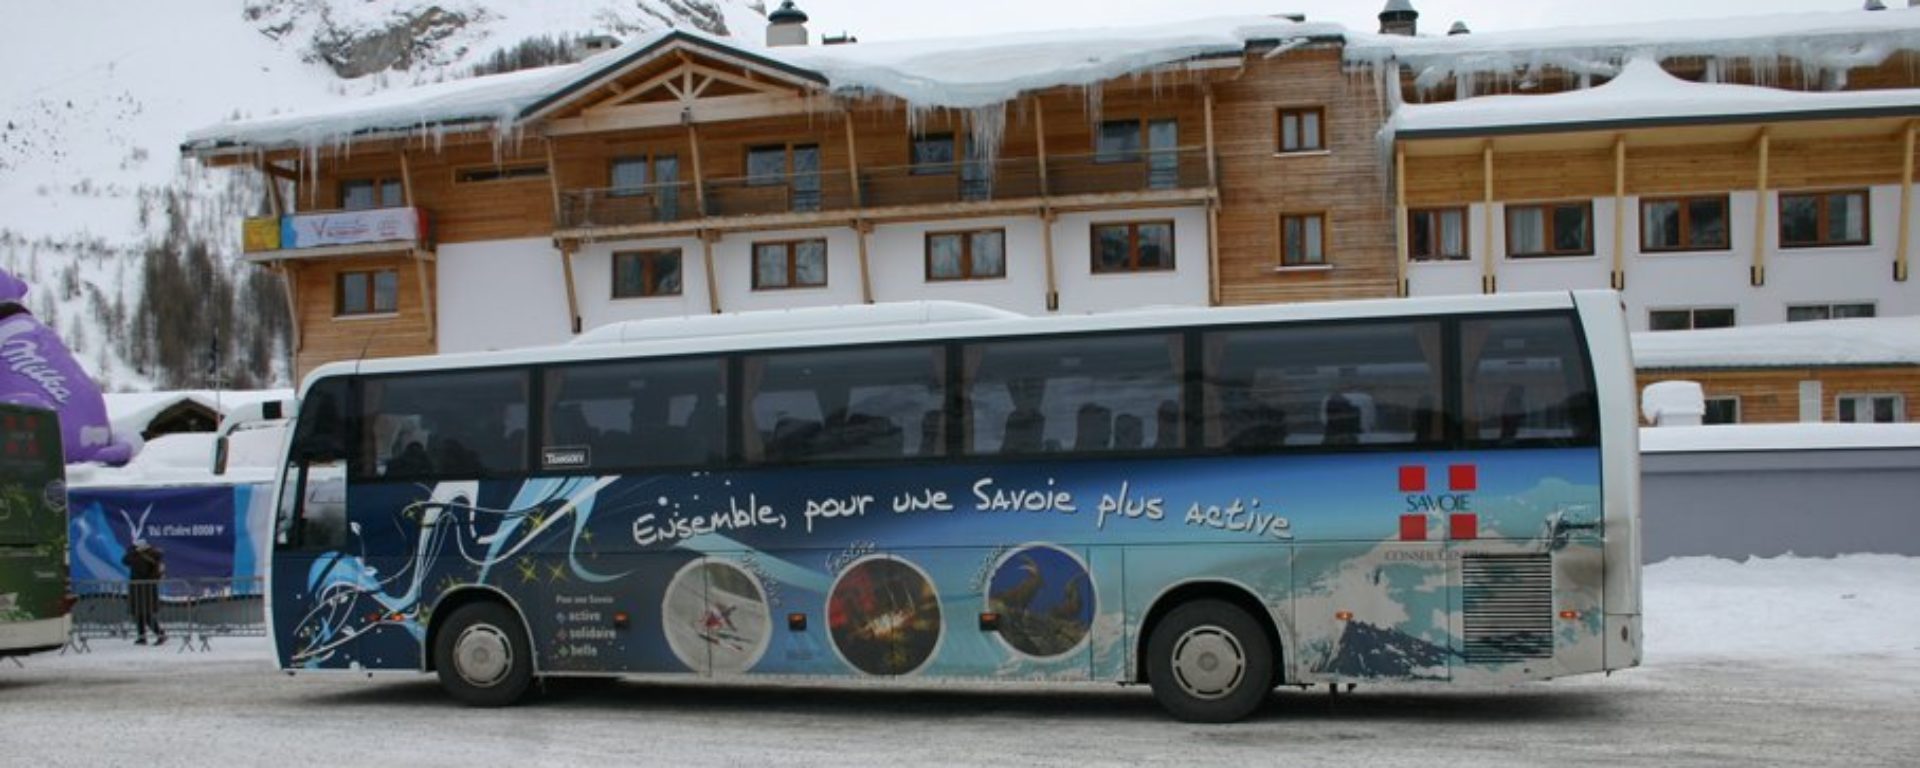 car bus tourisme transport voyage montagne ski neige savoie Transdev aura